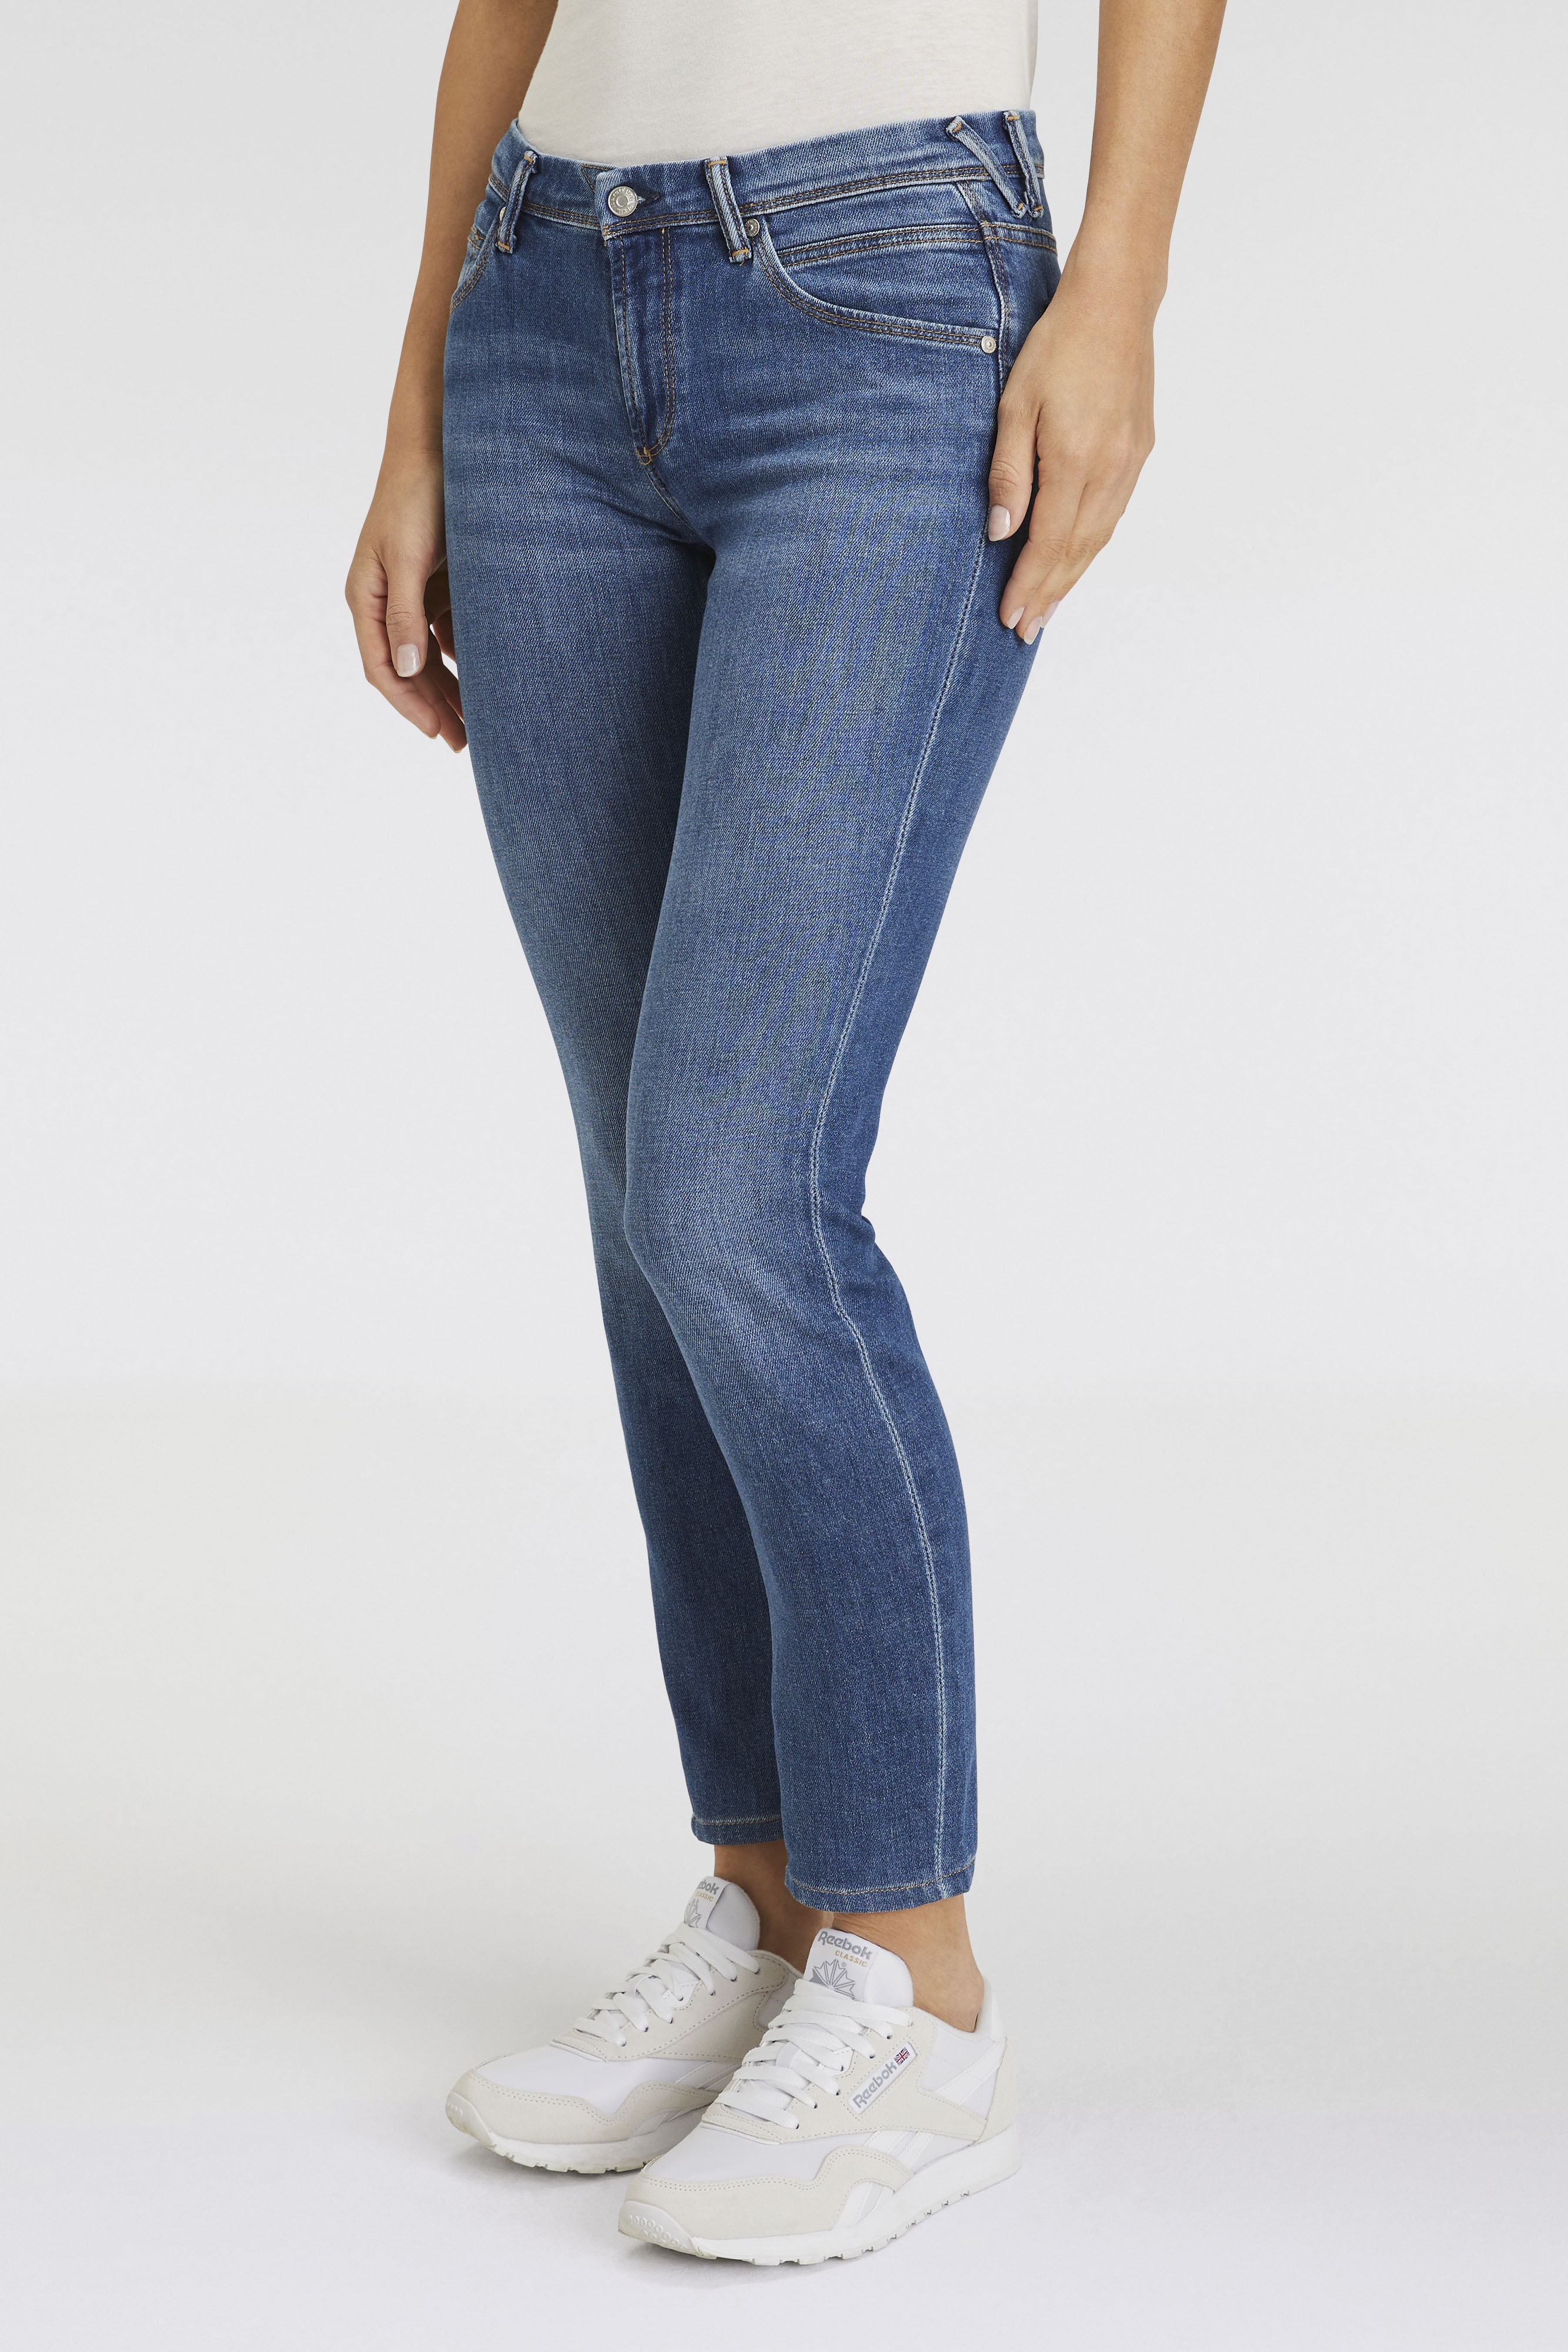 Skinny-fit-Jeans MARC O'POLO DENIM "Alva" Gr. 31, Länge 30, blau (denim blau) Damen Jeans Röhrenjeans